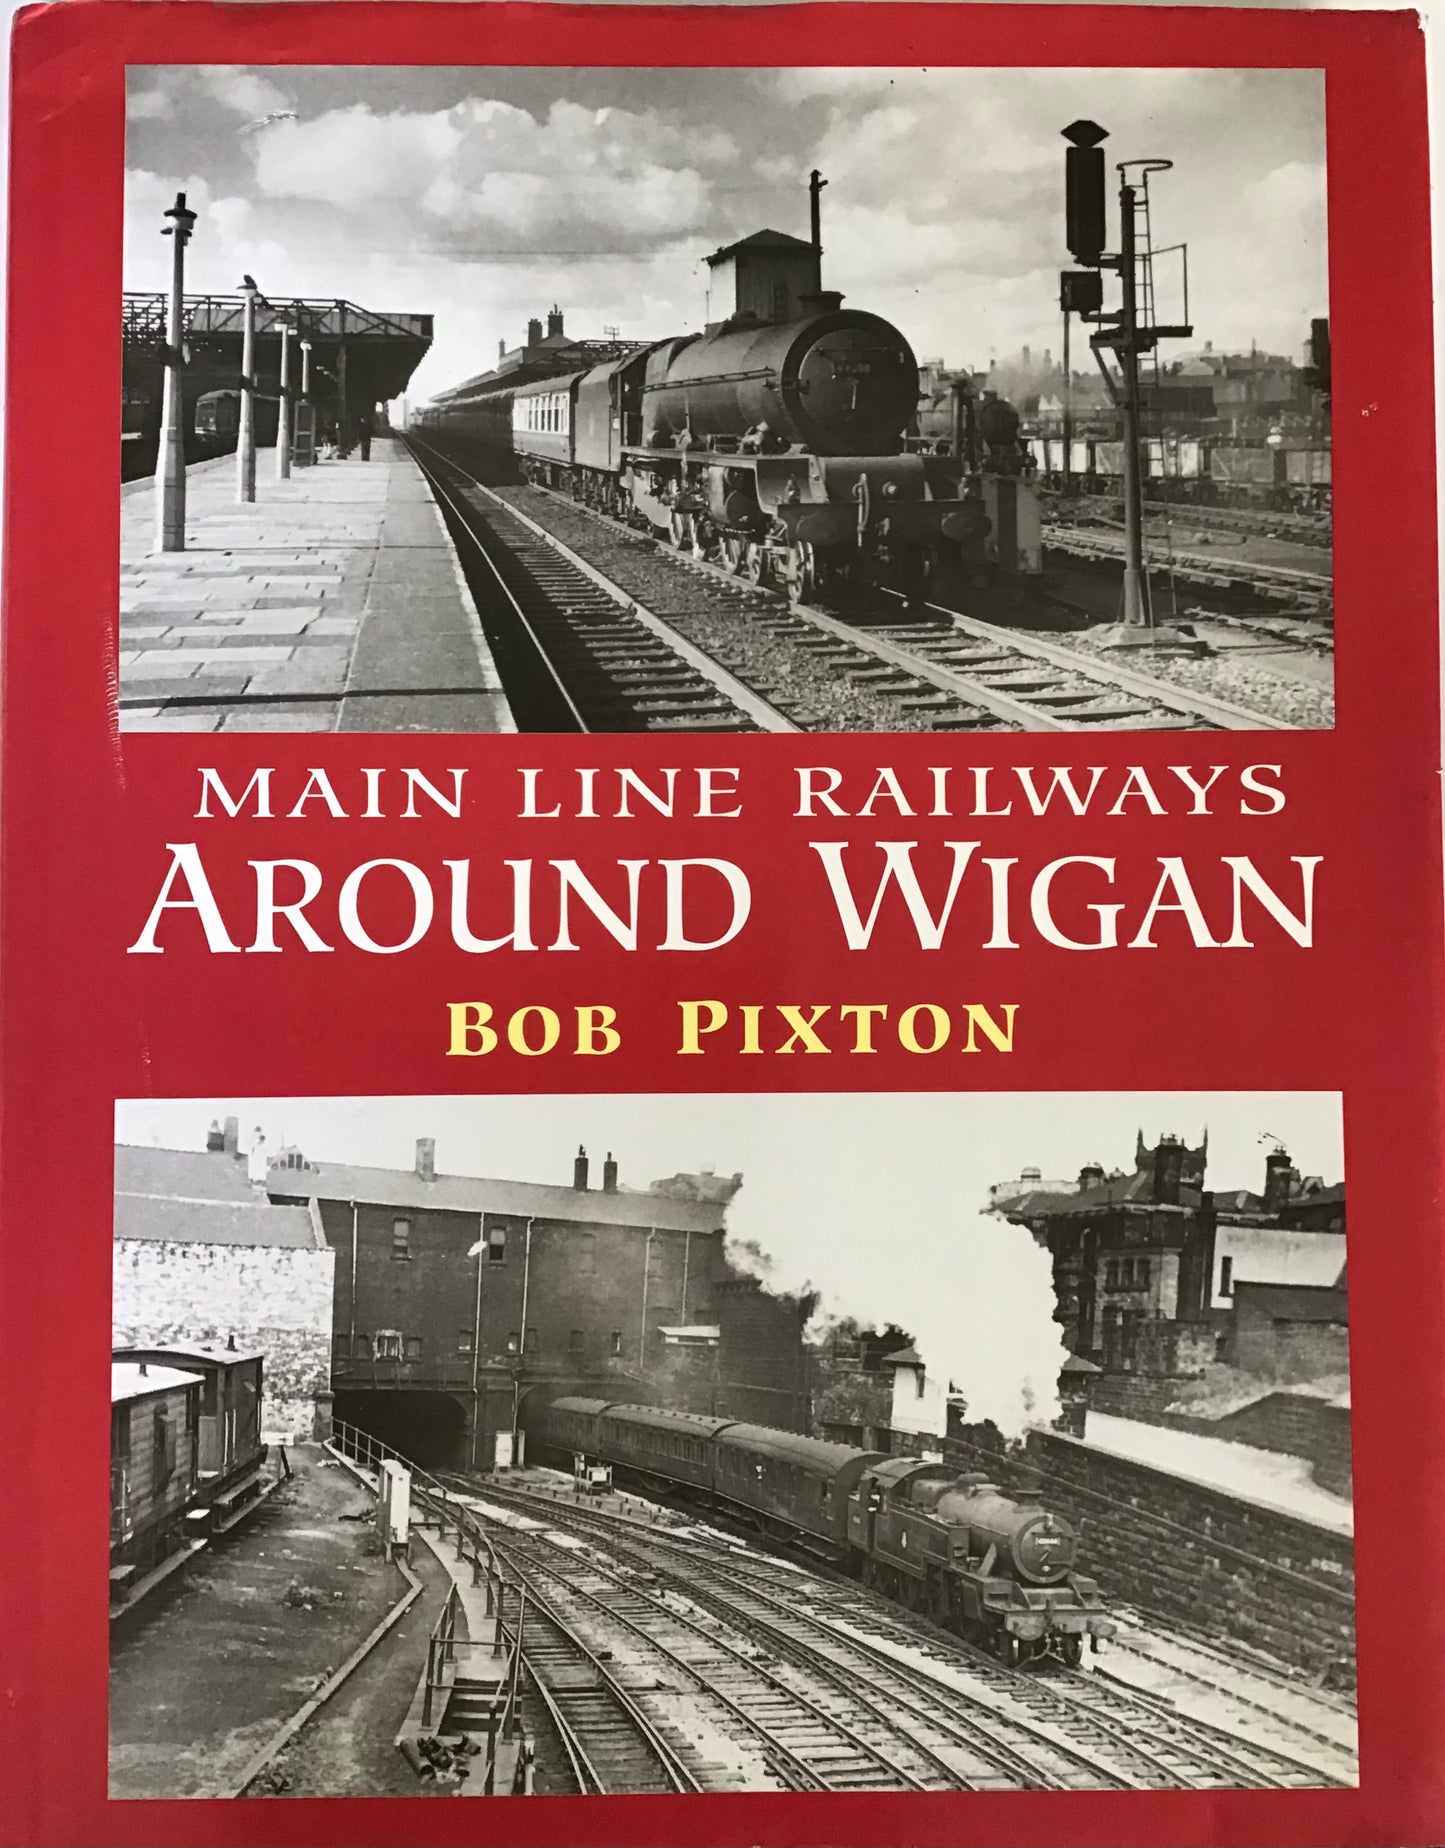 Main Line Railways Around Wigan - Bob Pixton - Chester Model Centre